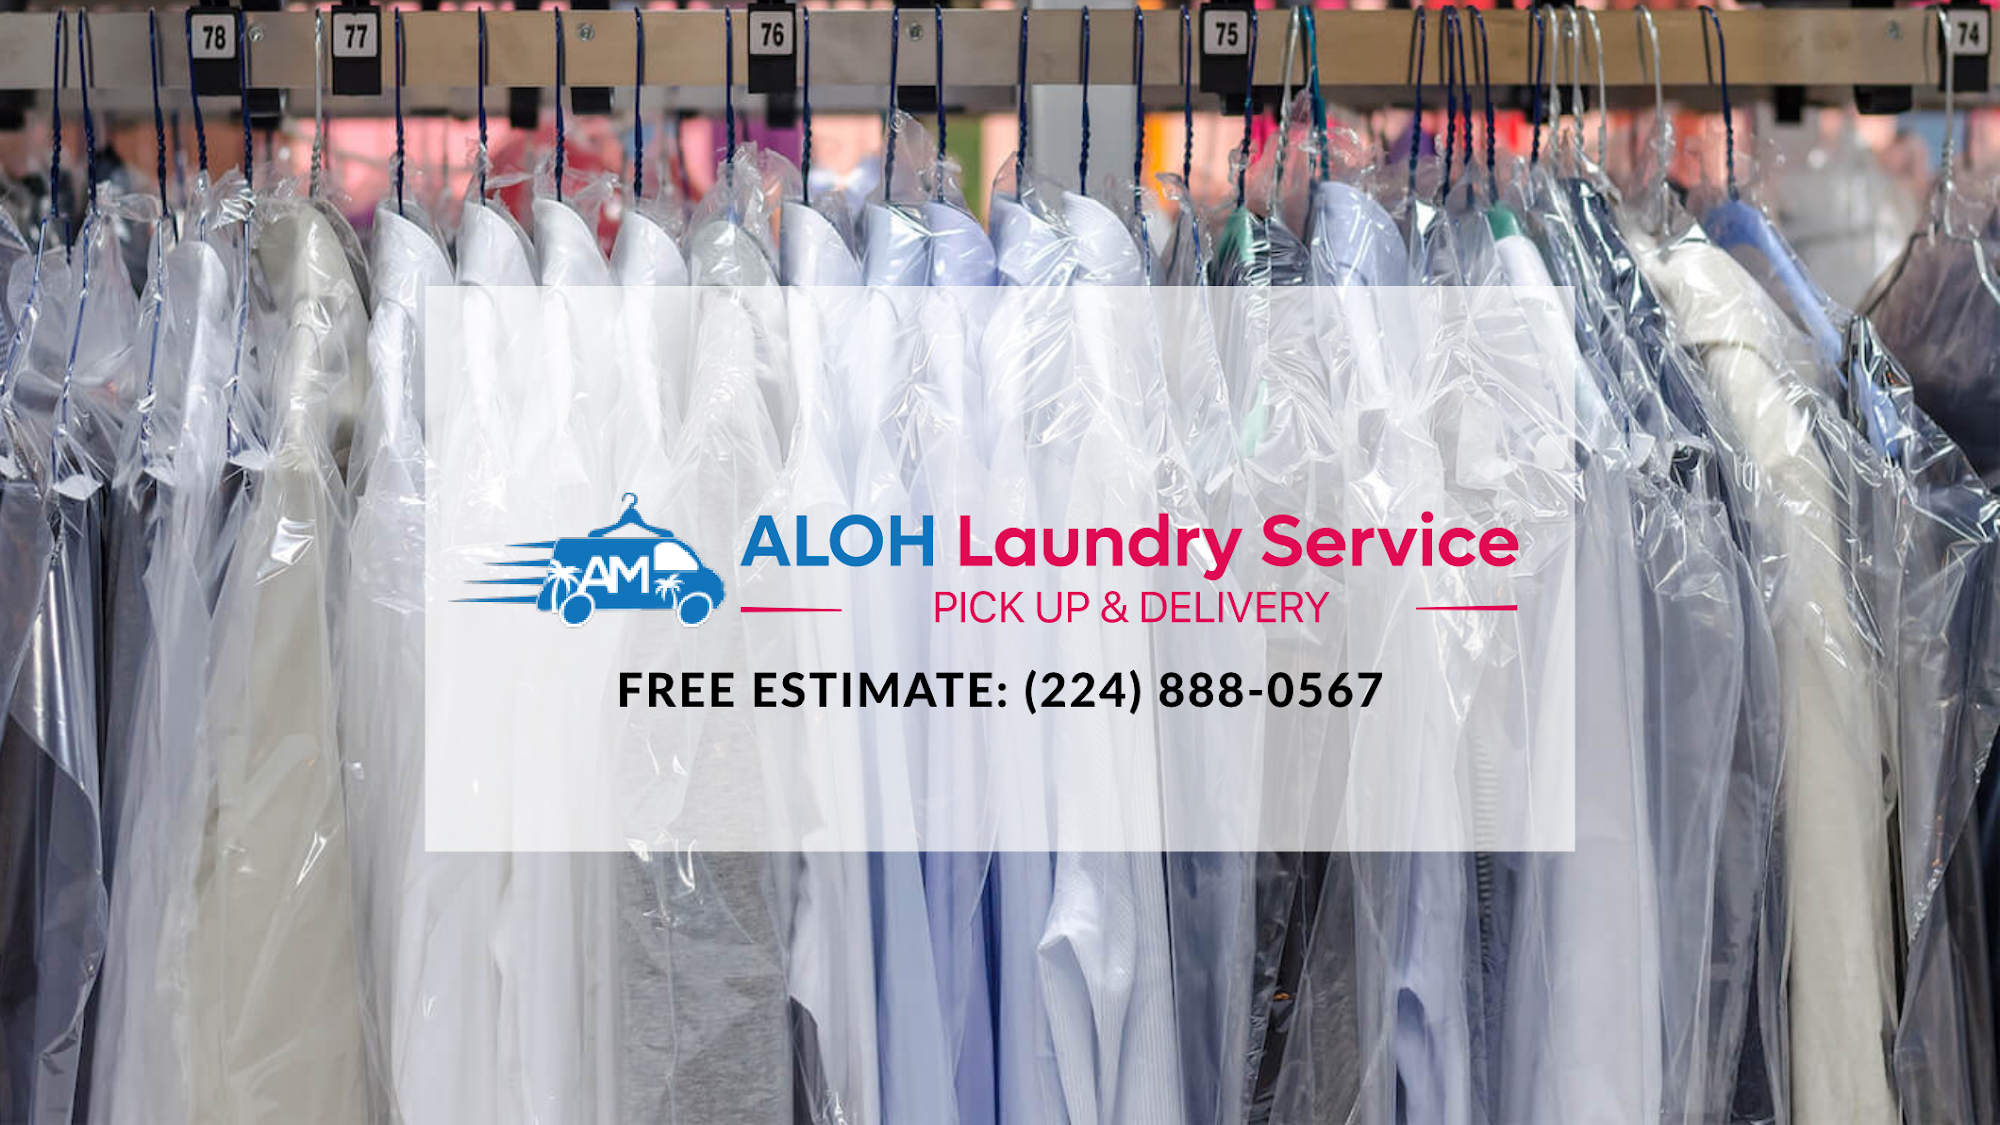 ALOH Laundry Service Pick Up & Delivery